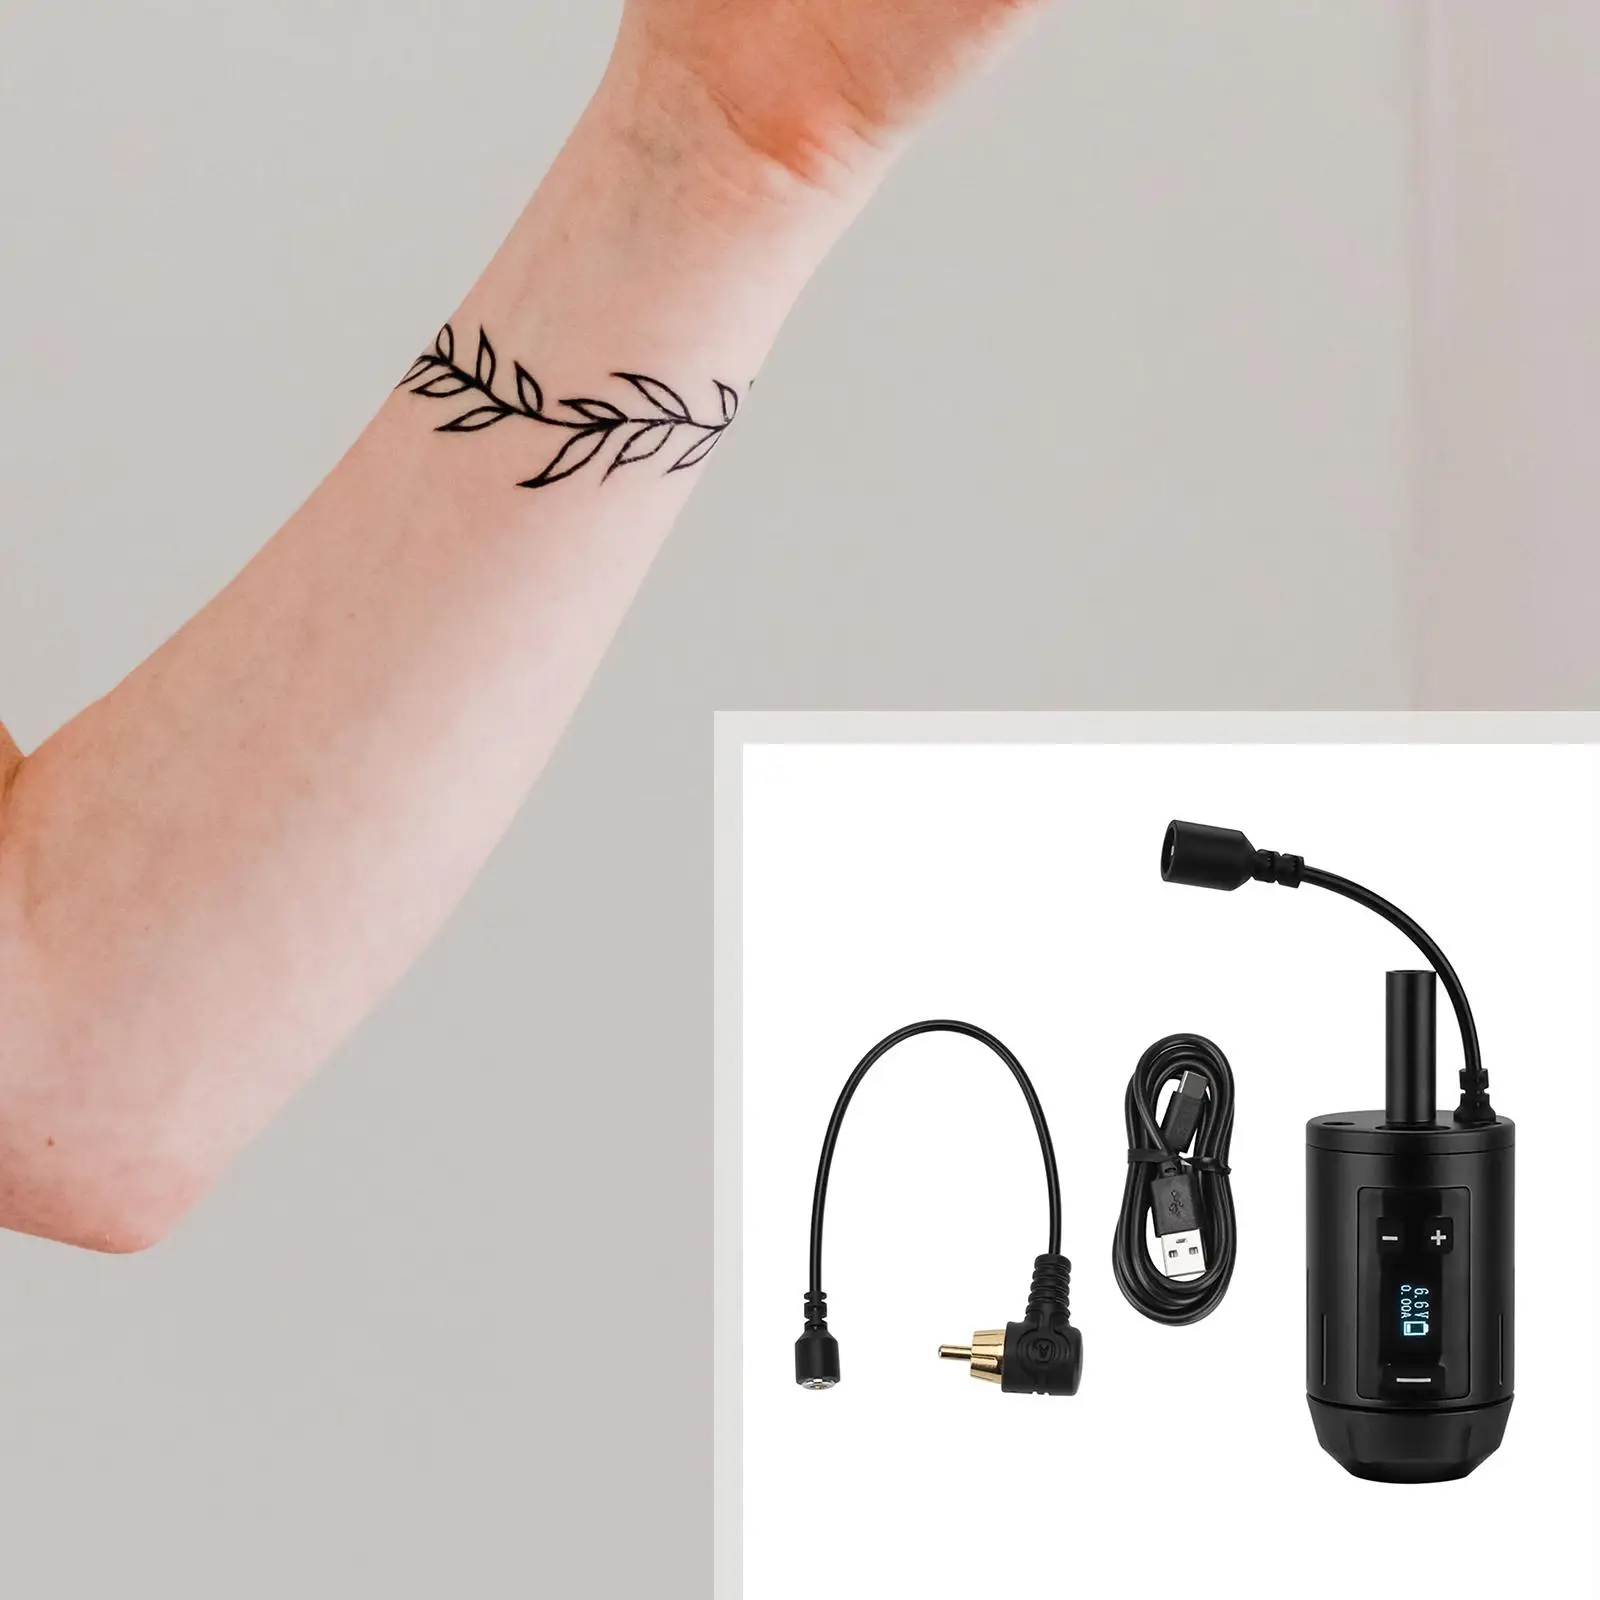 Tattoo Power Supply Grip, 4‐12V LED Digital Display Tattoo Charger Power Handle, Tattoo Battery Grip, for RCA Interface Motor